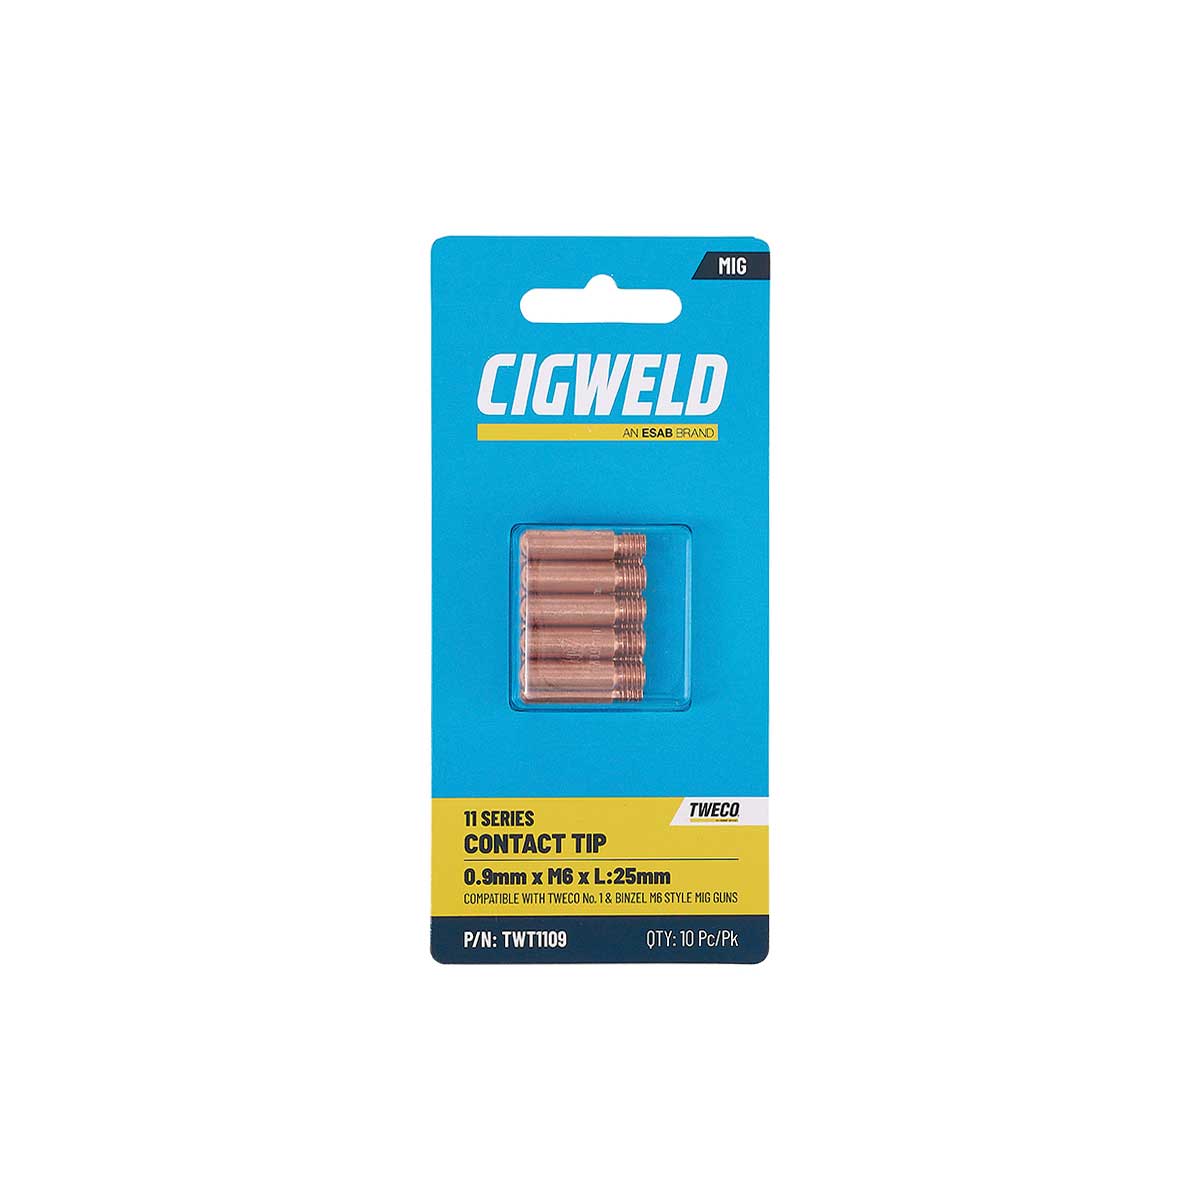 Cigweld Tweco 1 Contact Tip 0.9mm